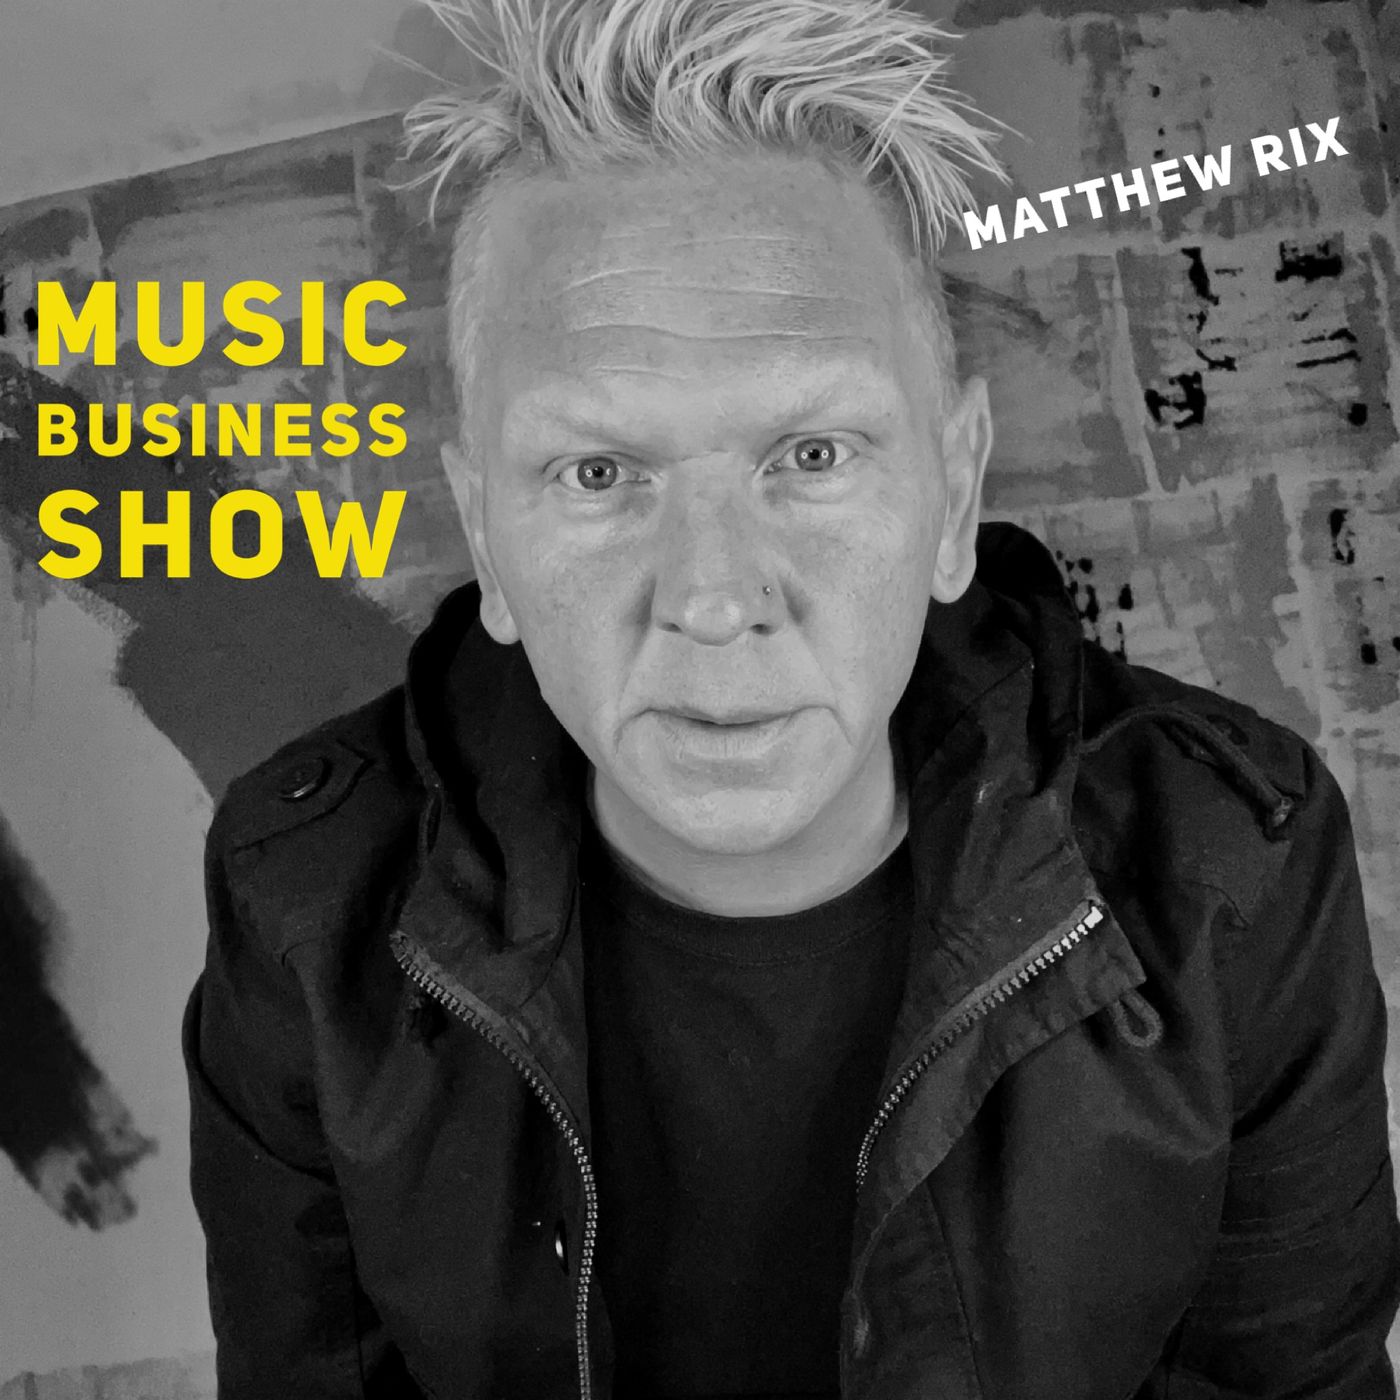 Music Business Show w/Matthew Rix